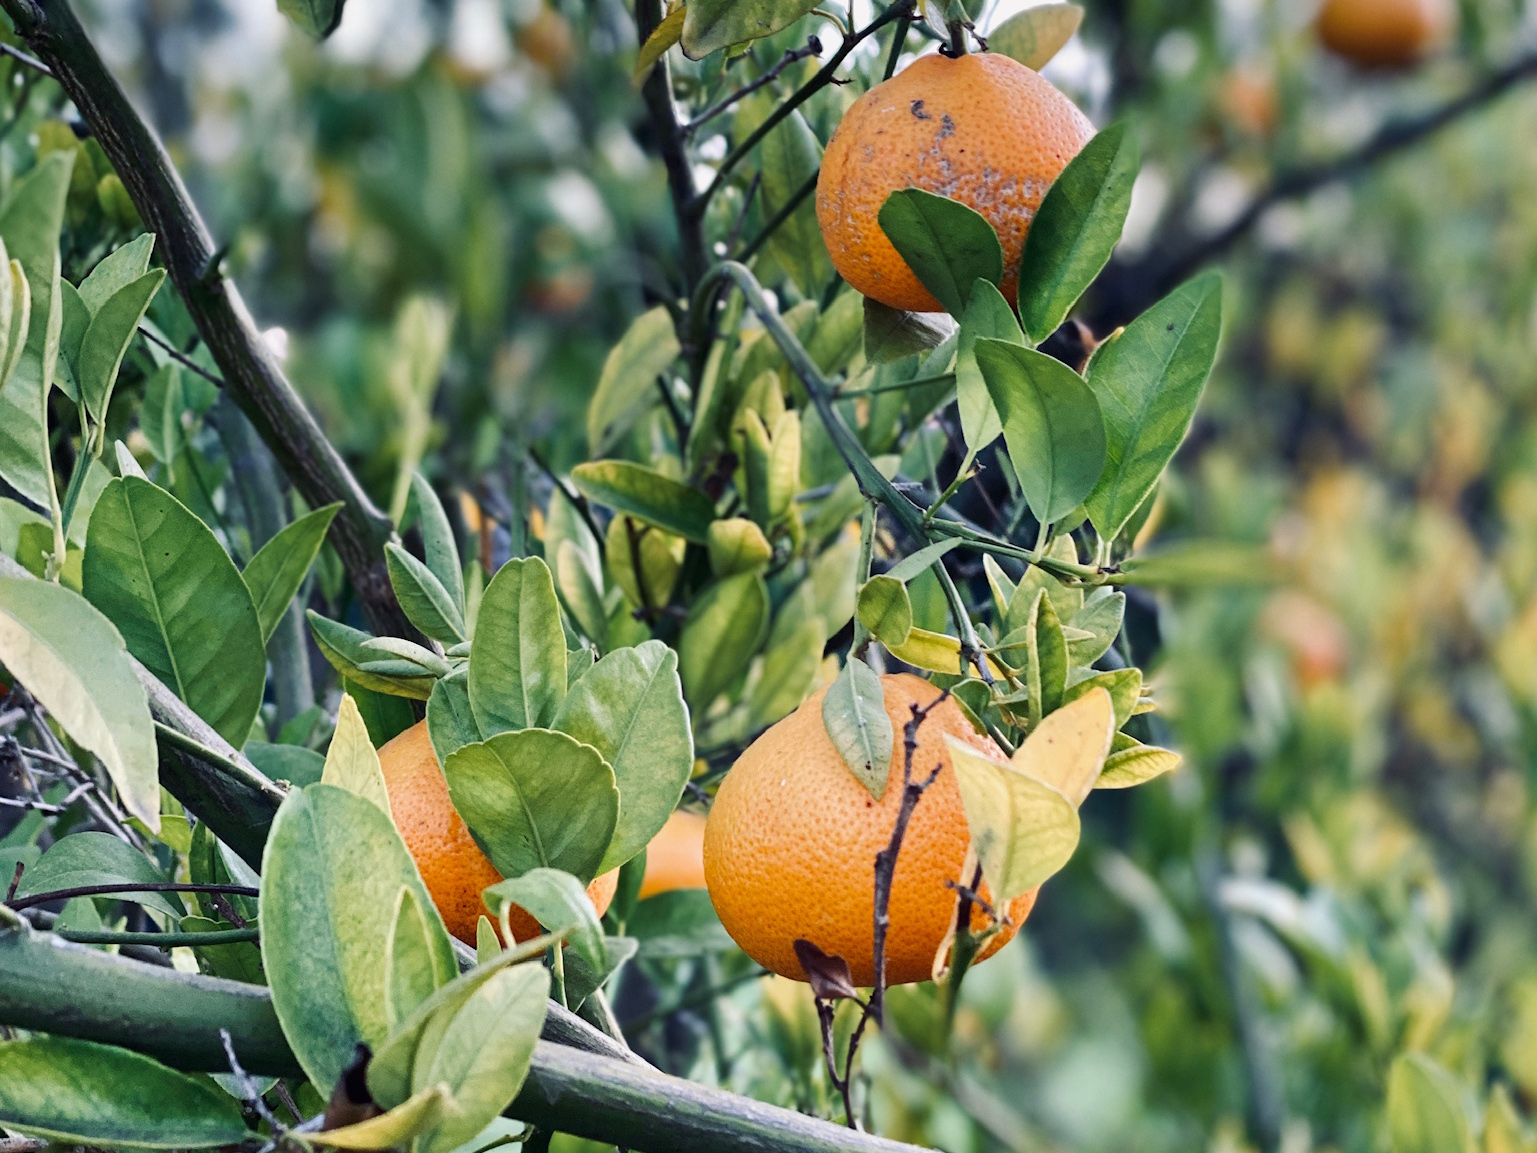 oranges on a tree